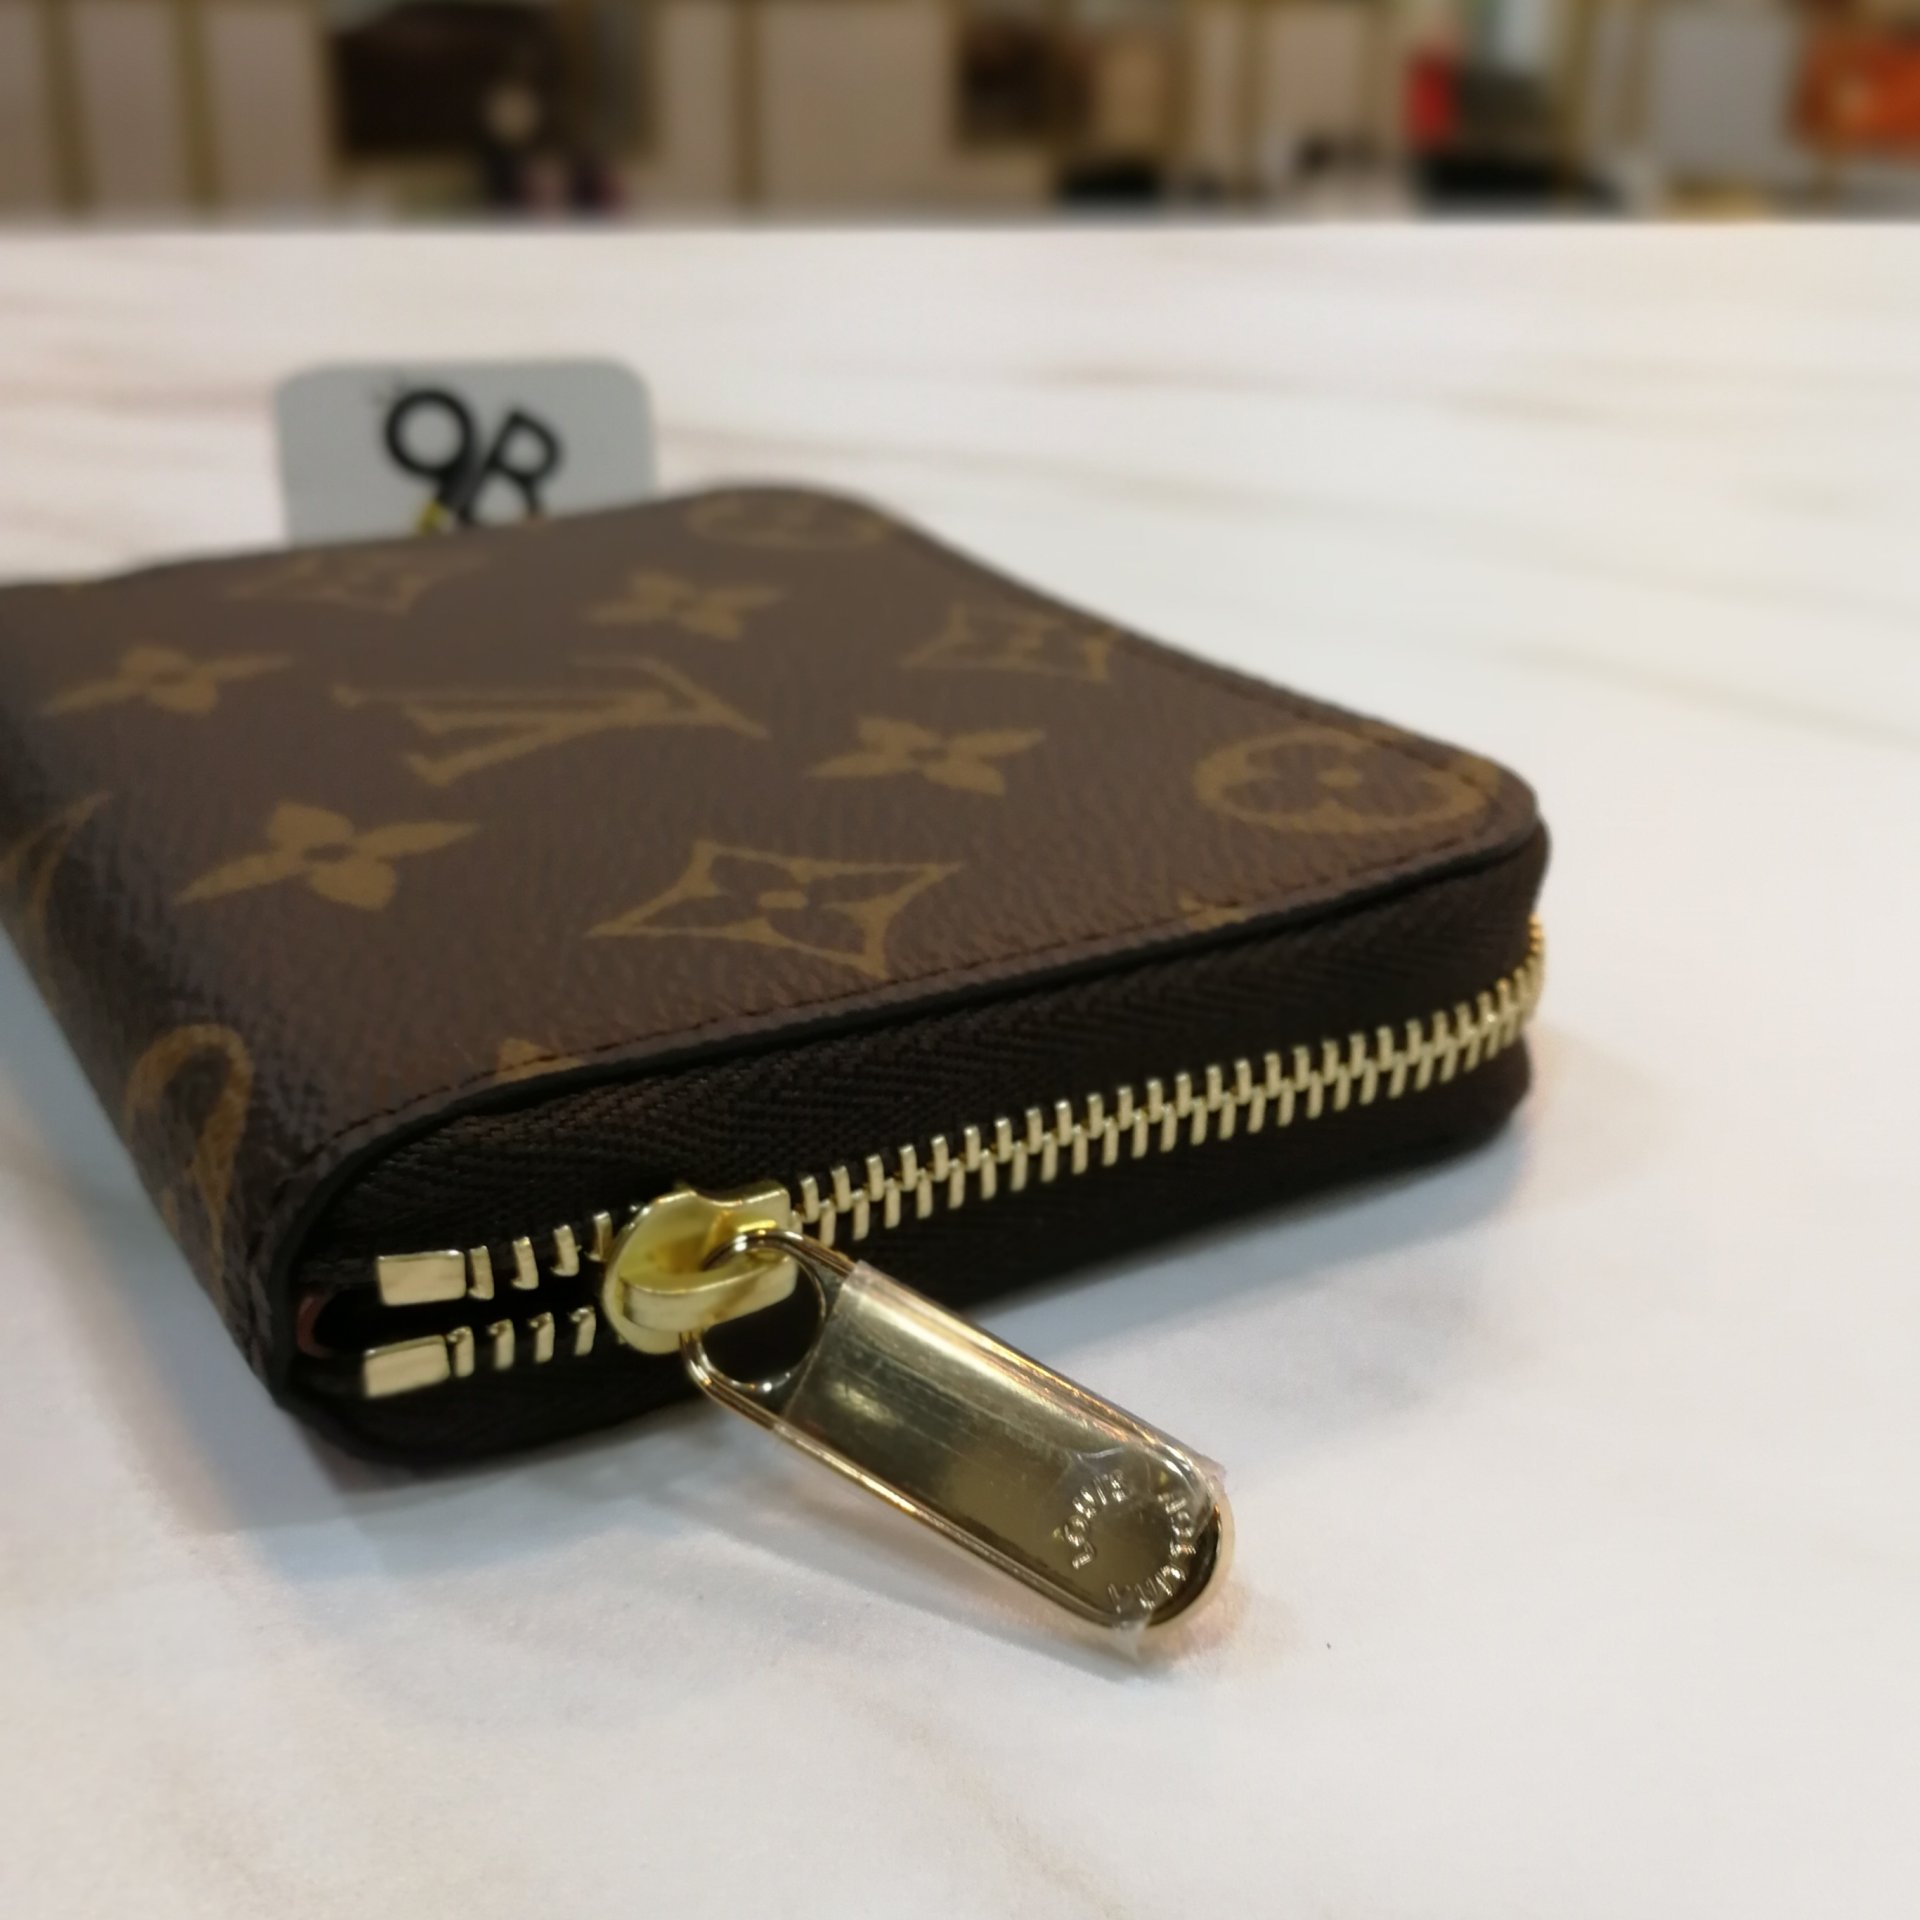 Shop Louis Vuitton Zippy coin purse (M60067) by design◇base